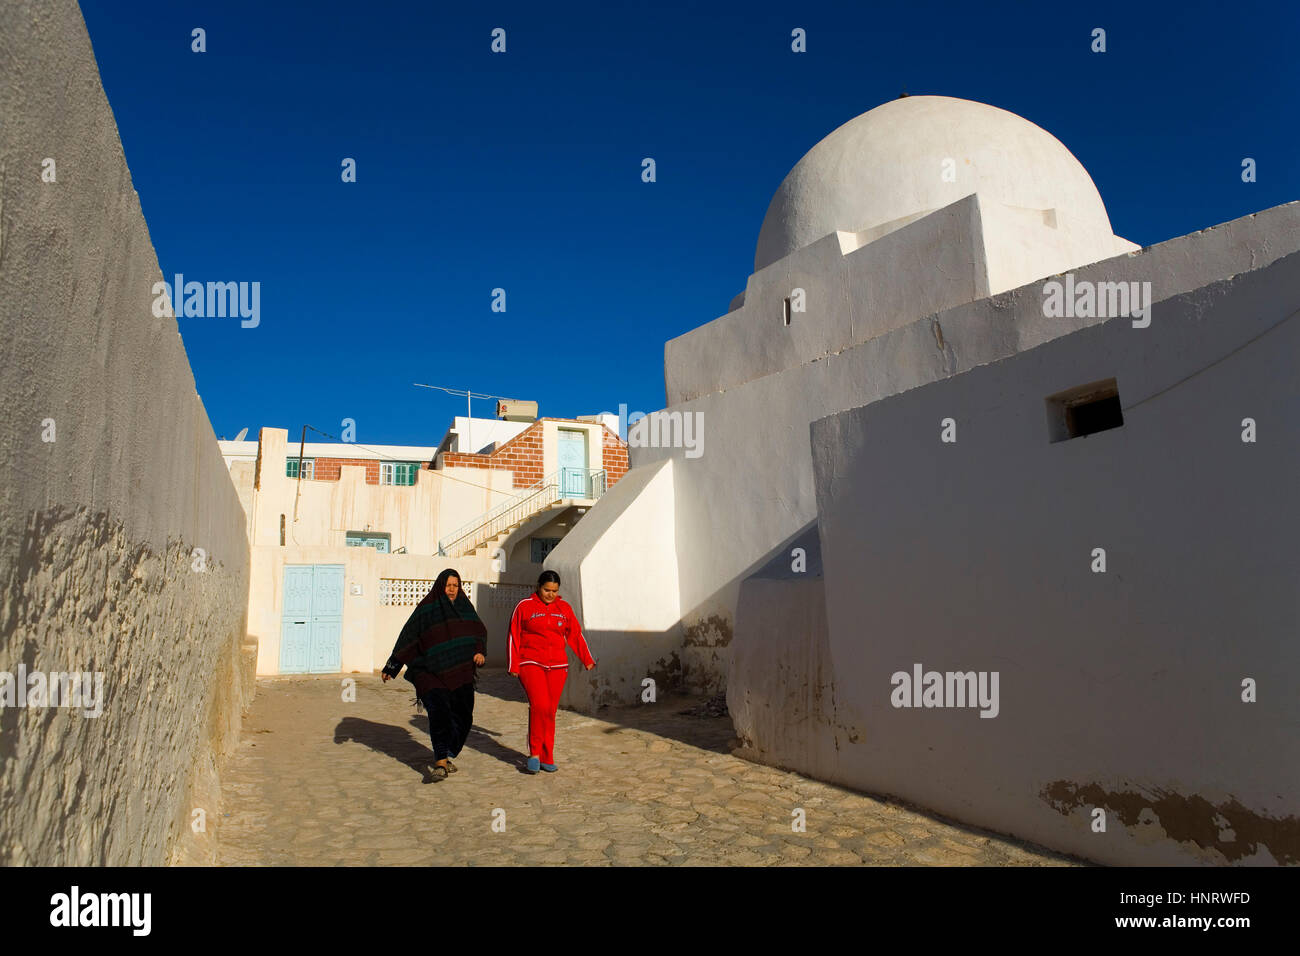 Tunisia.Gafsa. Traditional architecture Stock Photo